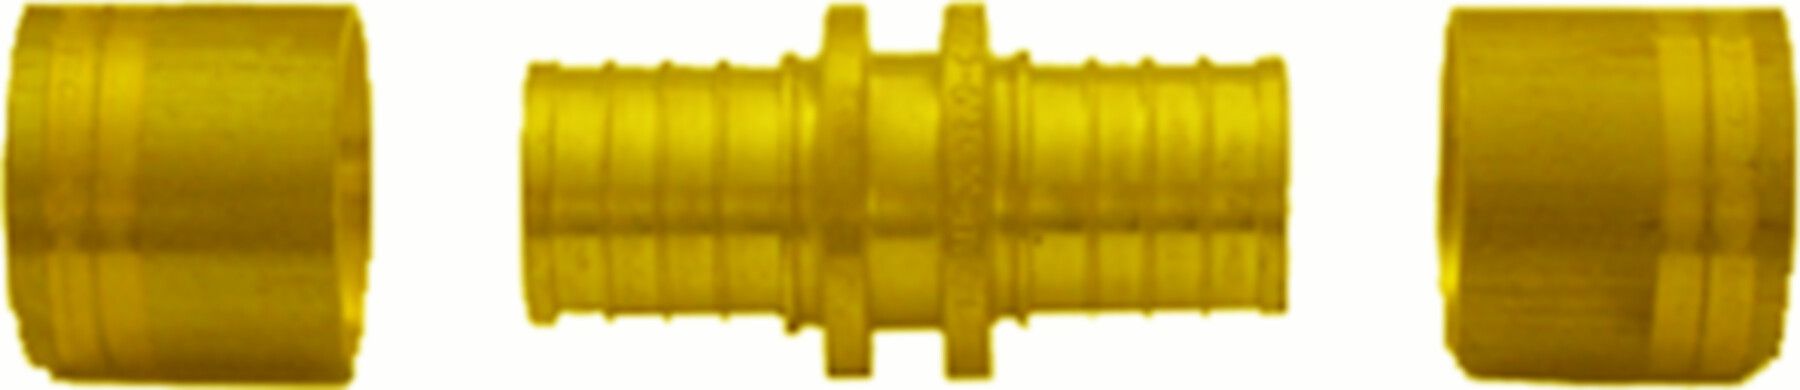 Press-Verbinundskupplung PVK egal S - 63 ø 63/8.7 mm - Isopex Fernwärmeleitung